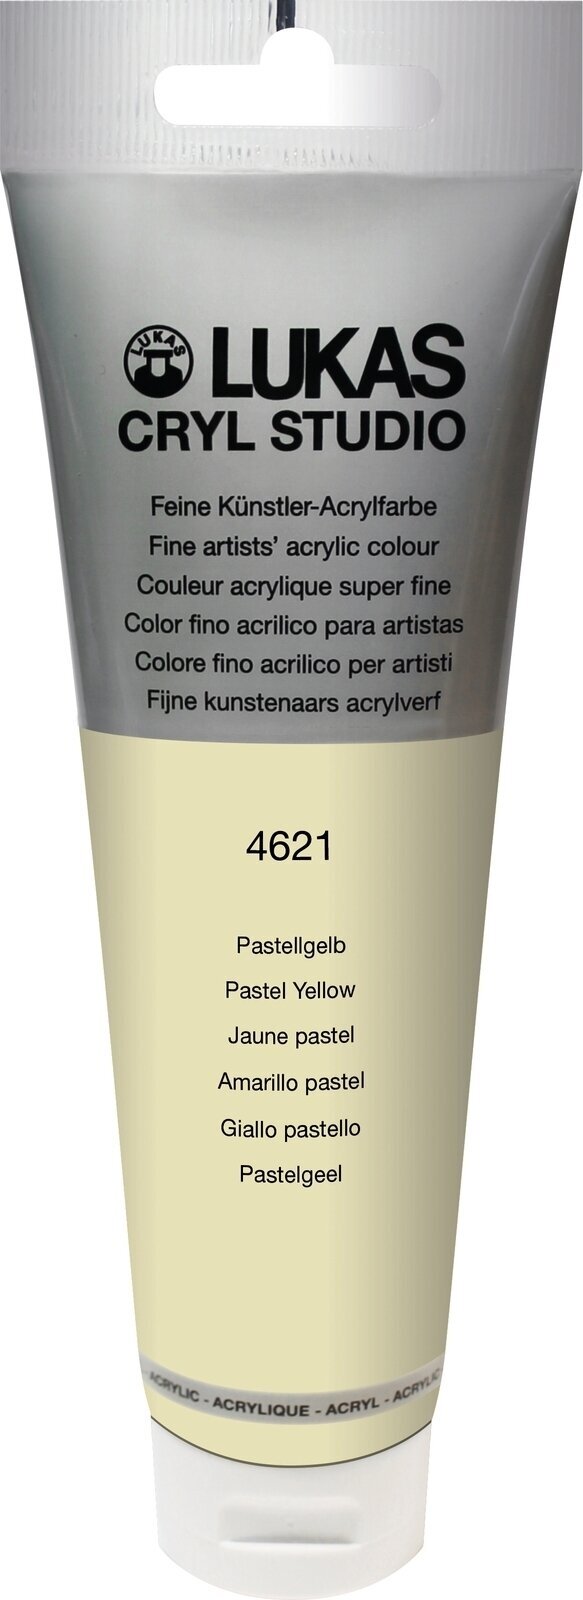 Akrylová farba Lukas Cryl Studio Acrylic Paint Plastic Tube Akrylová farba Pastel Yellow 125 ml 1 ks